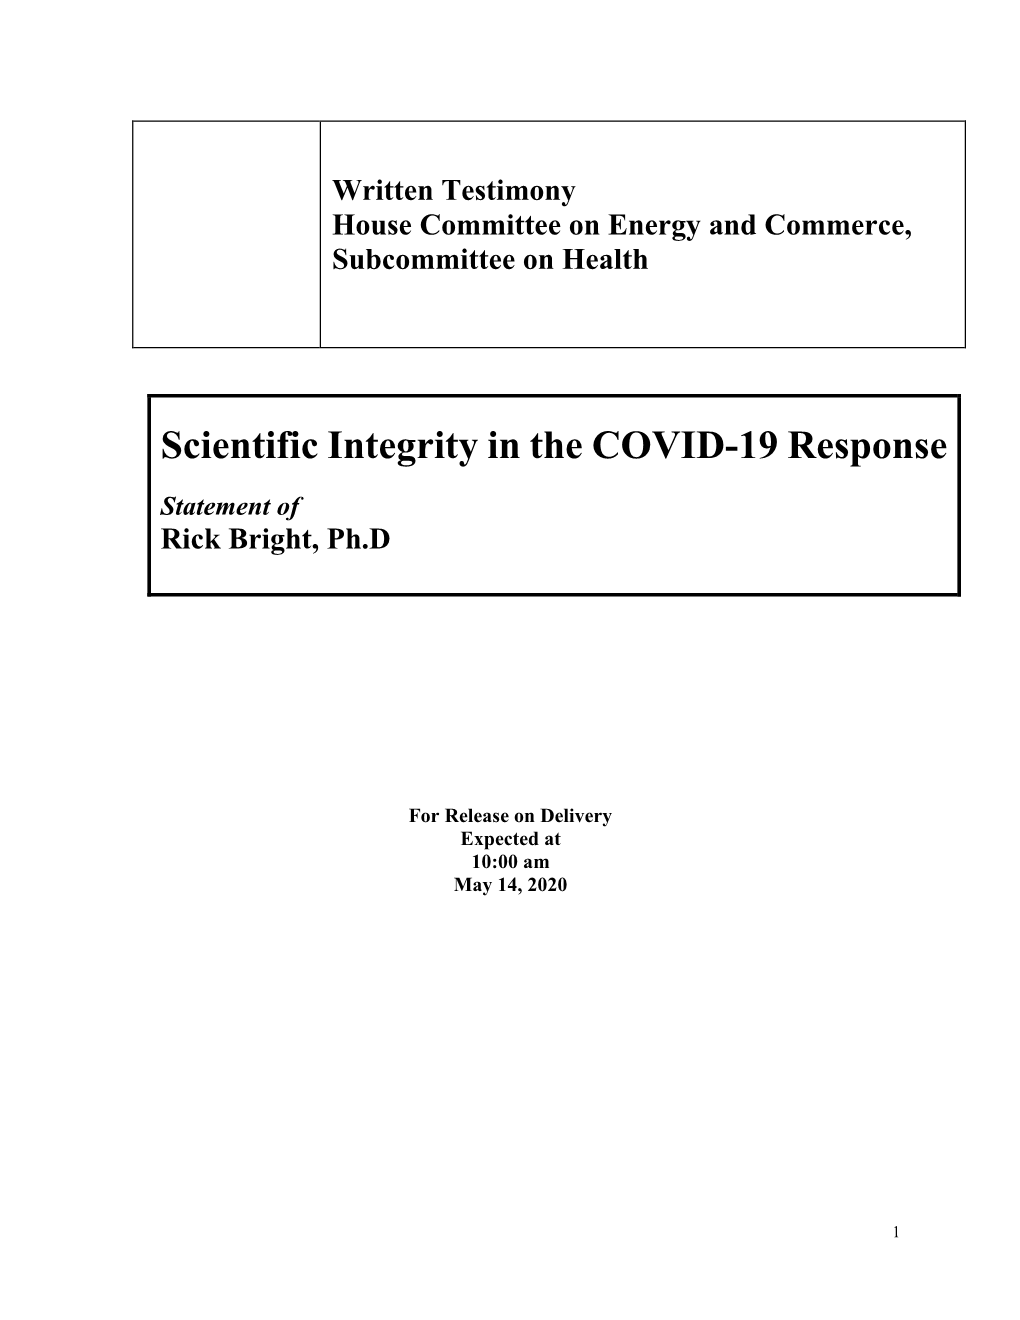 Scientific Integrity in the COVID-19 Response